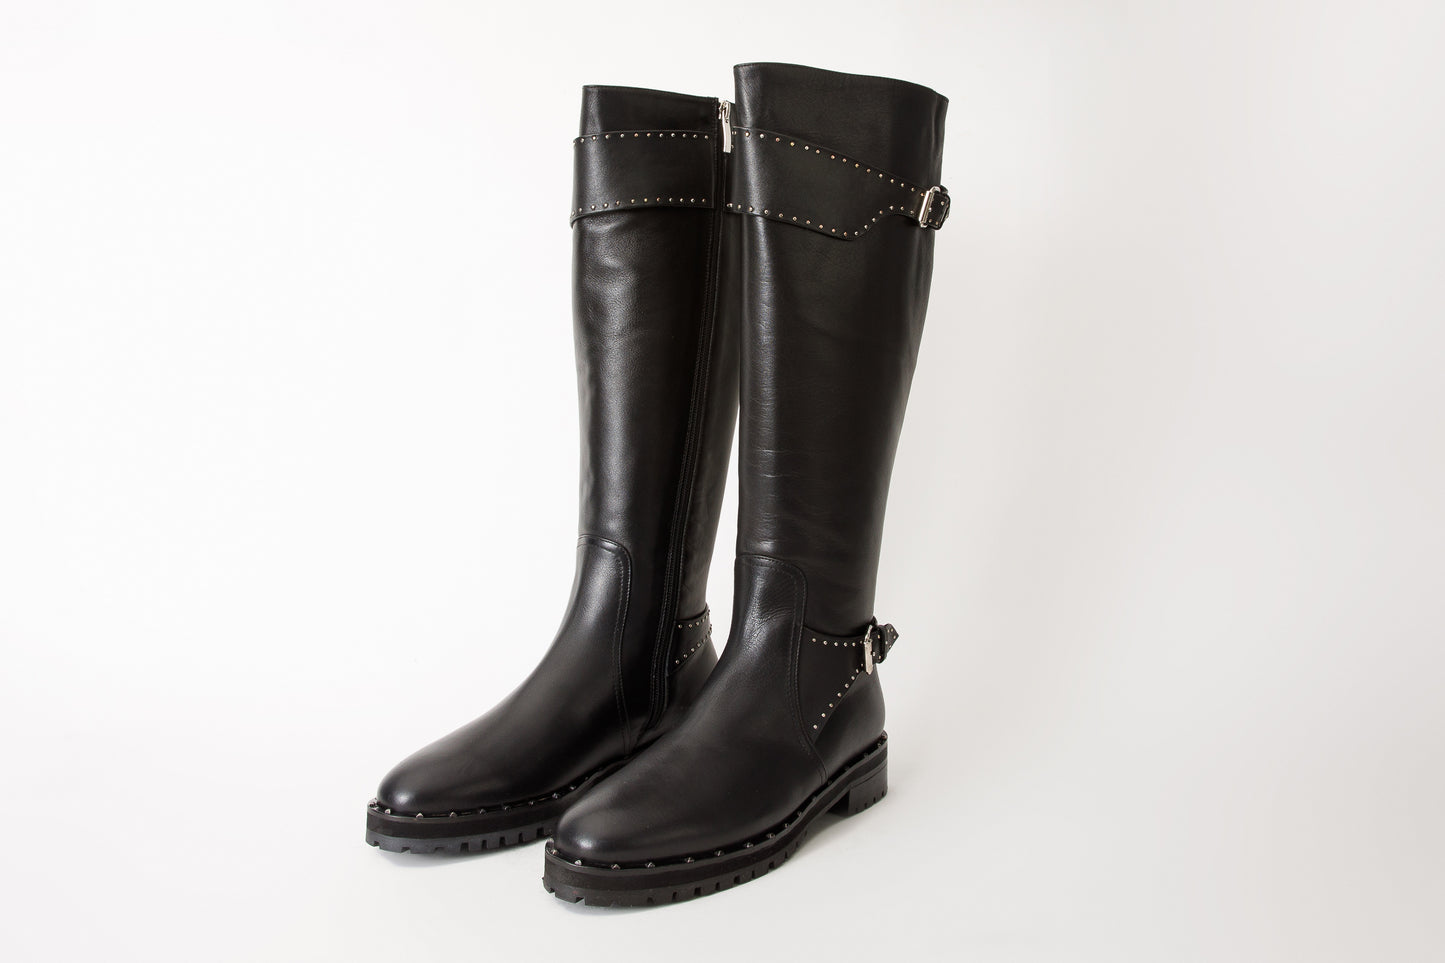 The Sariyer Black Leather Knee High Women Boot